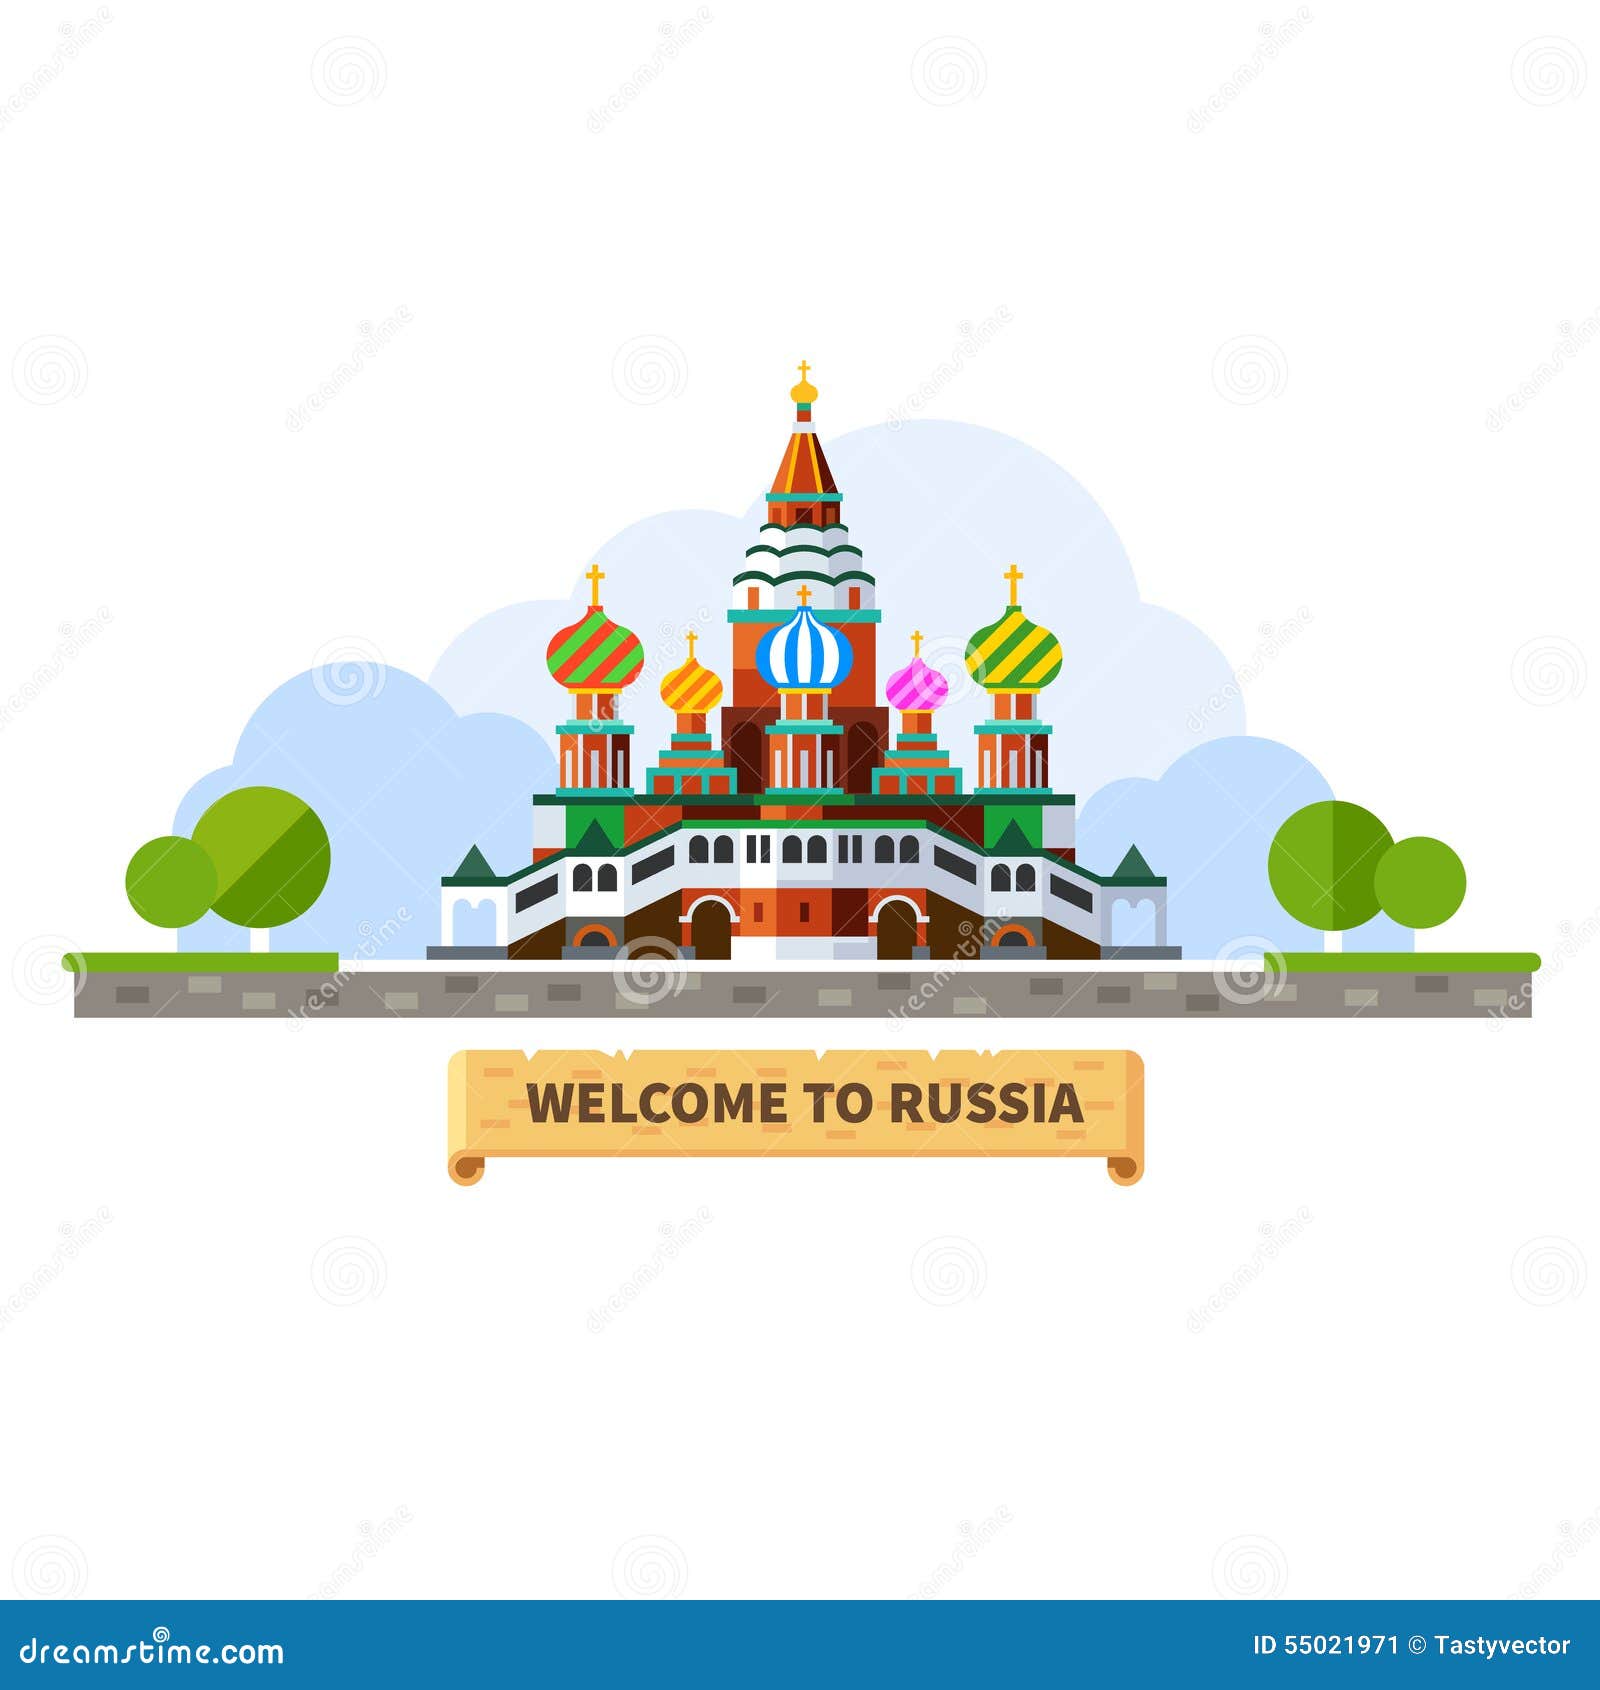 PESTEL-PESTLE Analysis of Russia